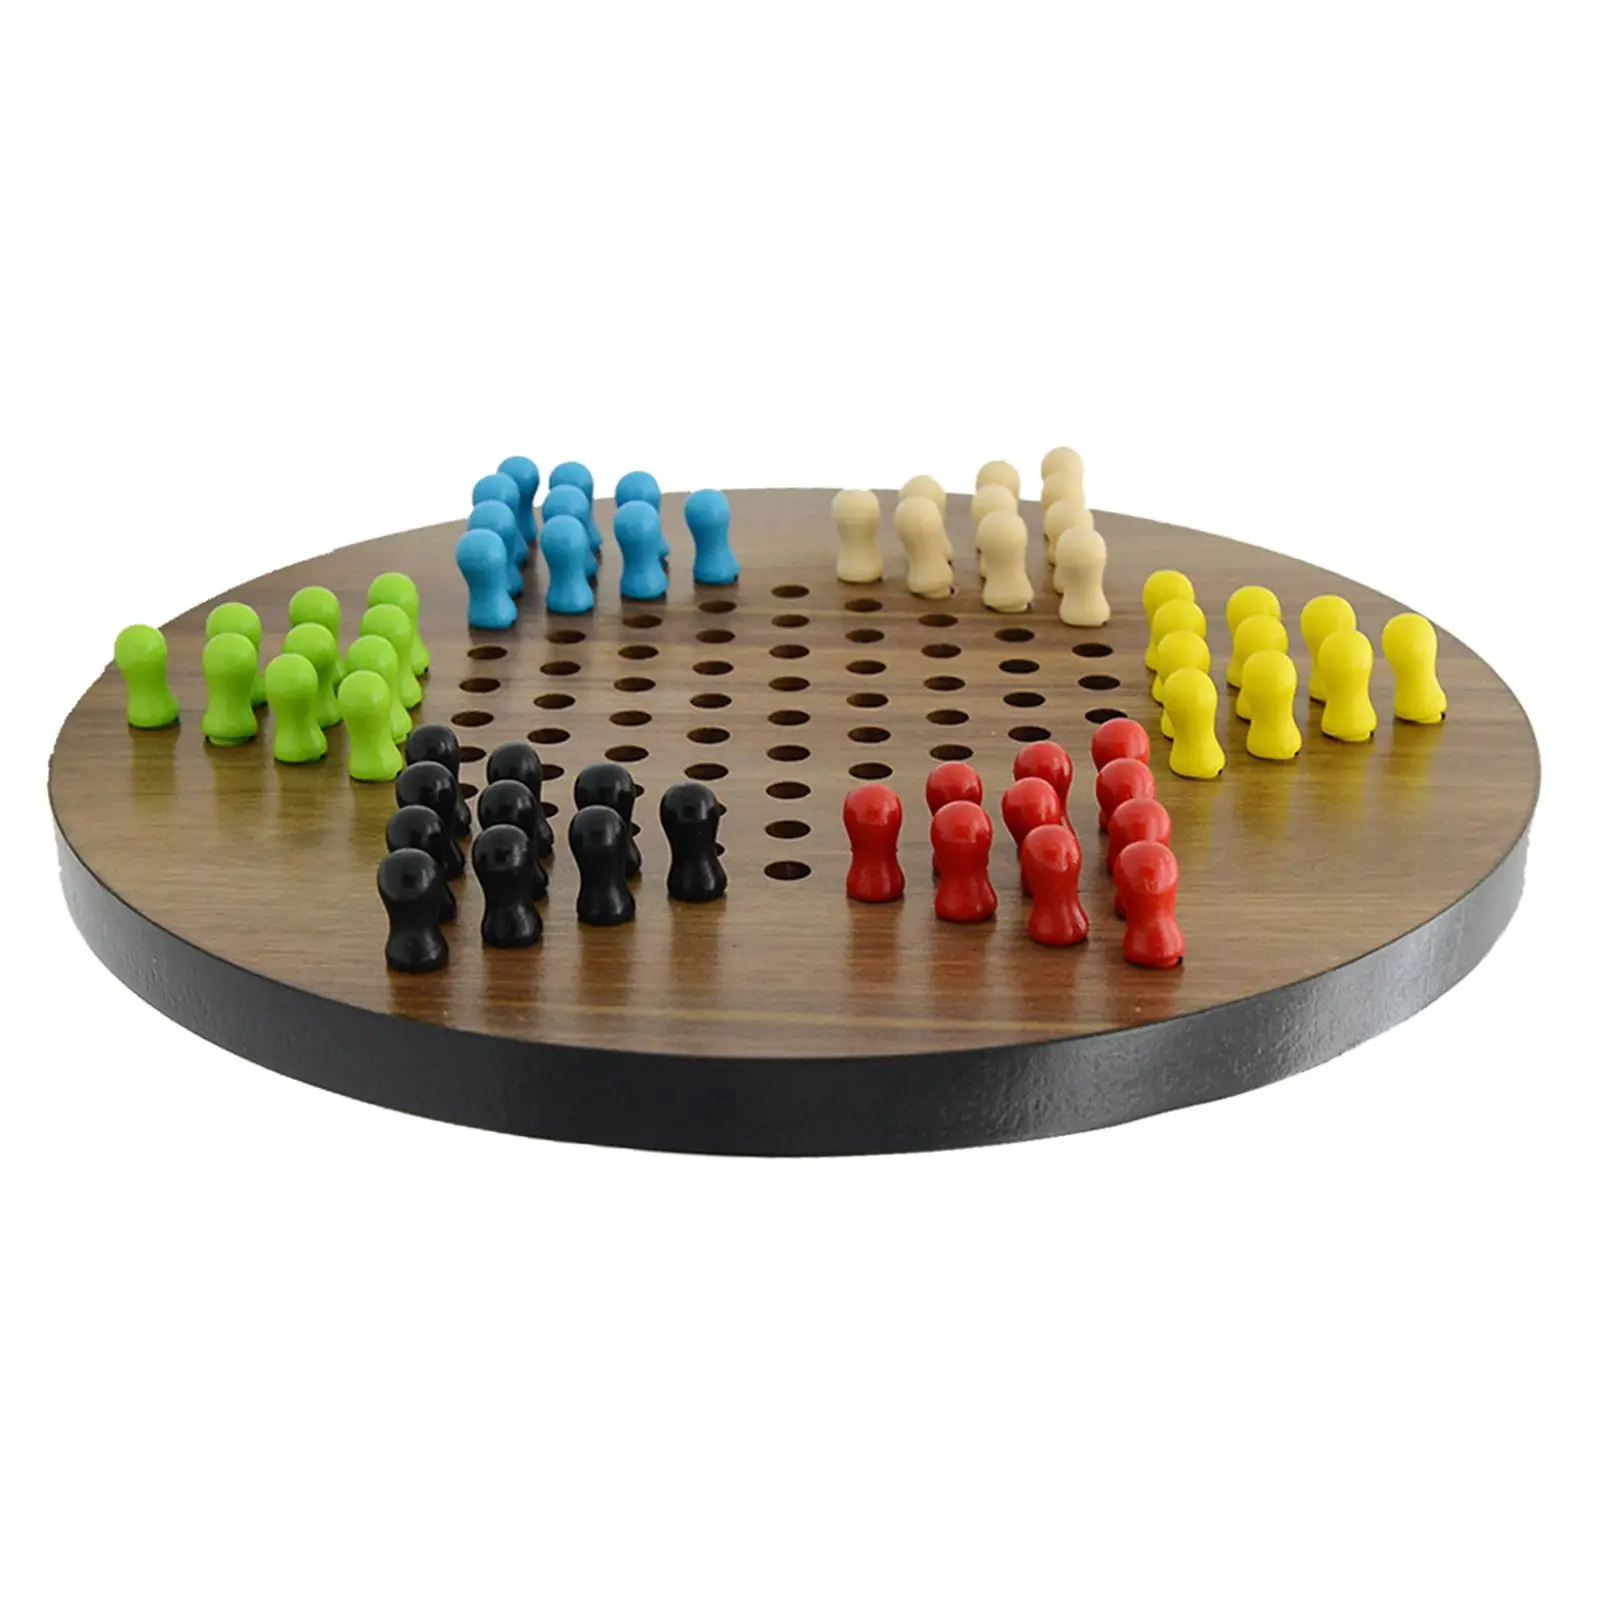 Chinese Checkers Game Chinese Checkers Game Set Includes 60 Colorful for Preschool